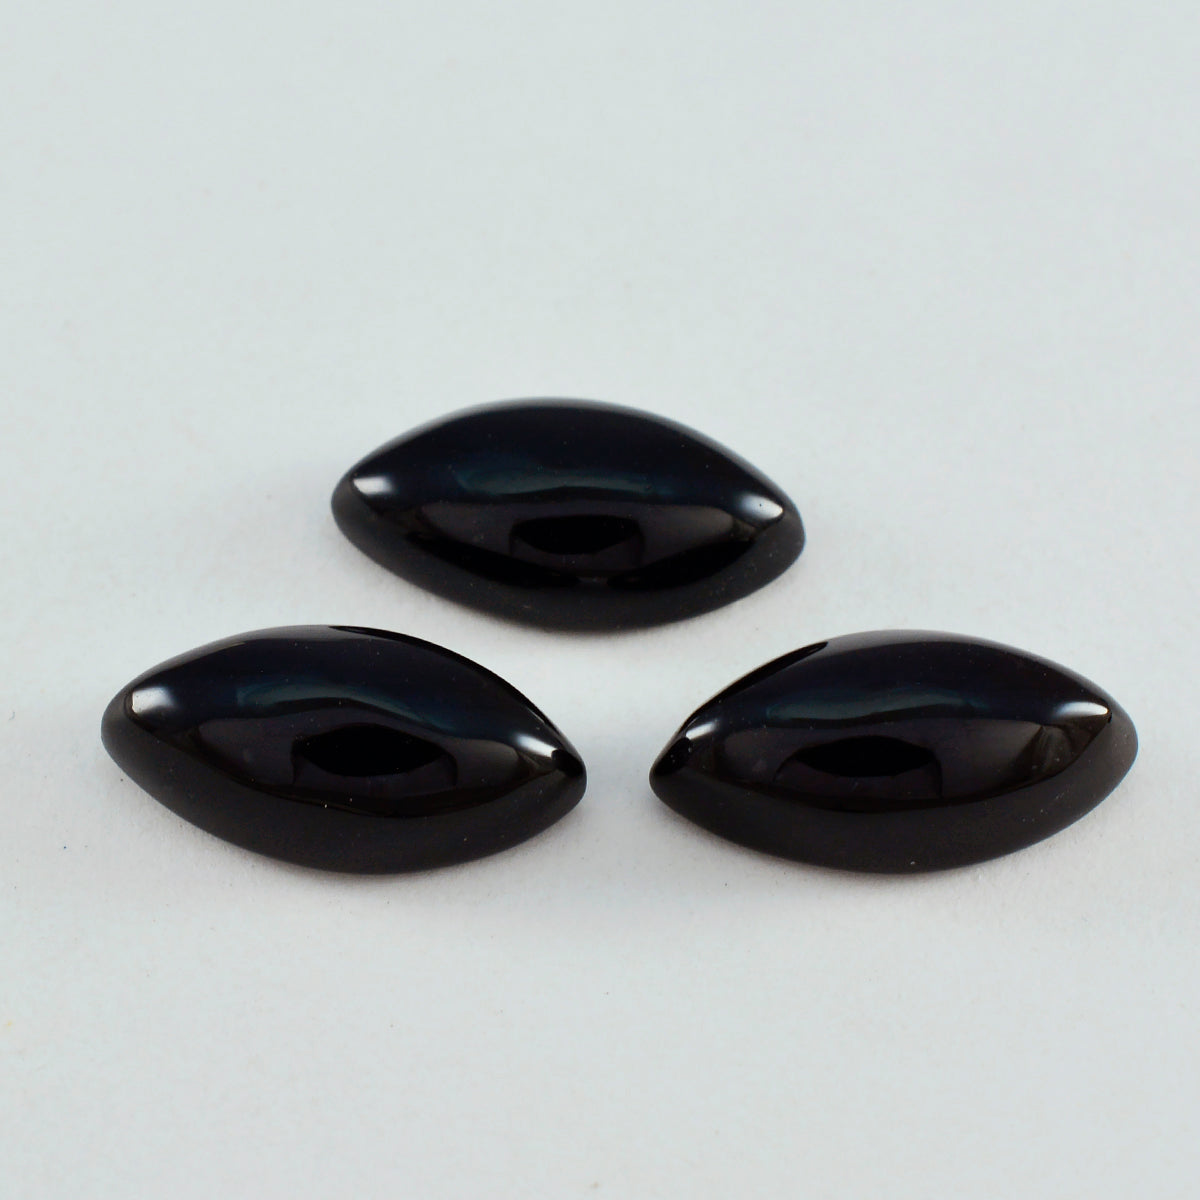 Riyogems 1 Stück schwarzer Onyx-Cabochon, 10 x 20 mm, Marquise-Form, attraktiver, hochwertiger loser Stein